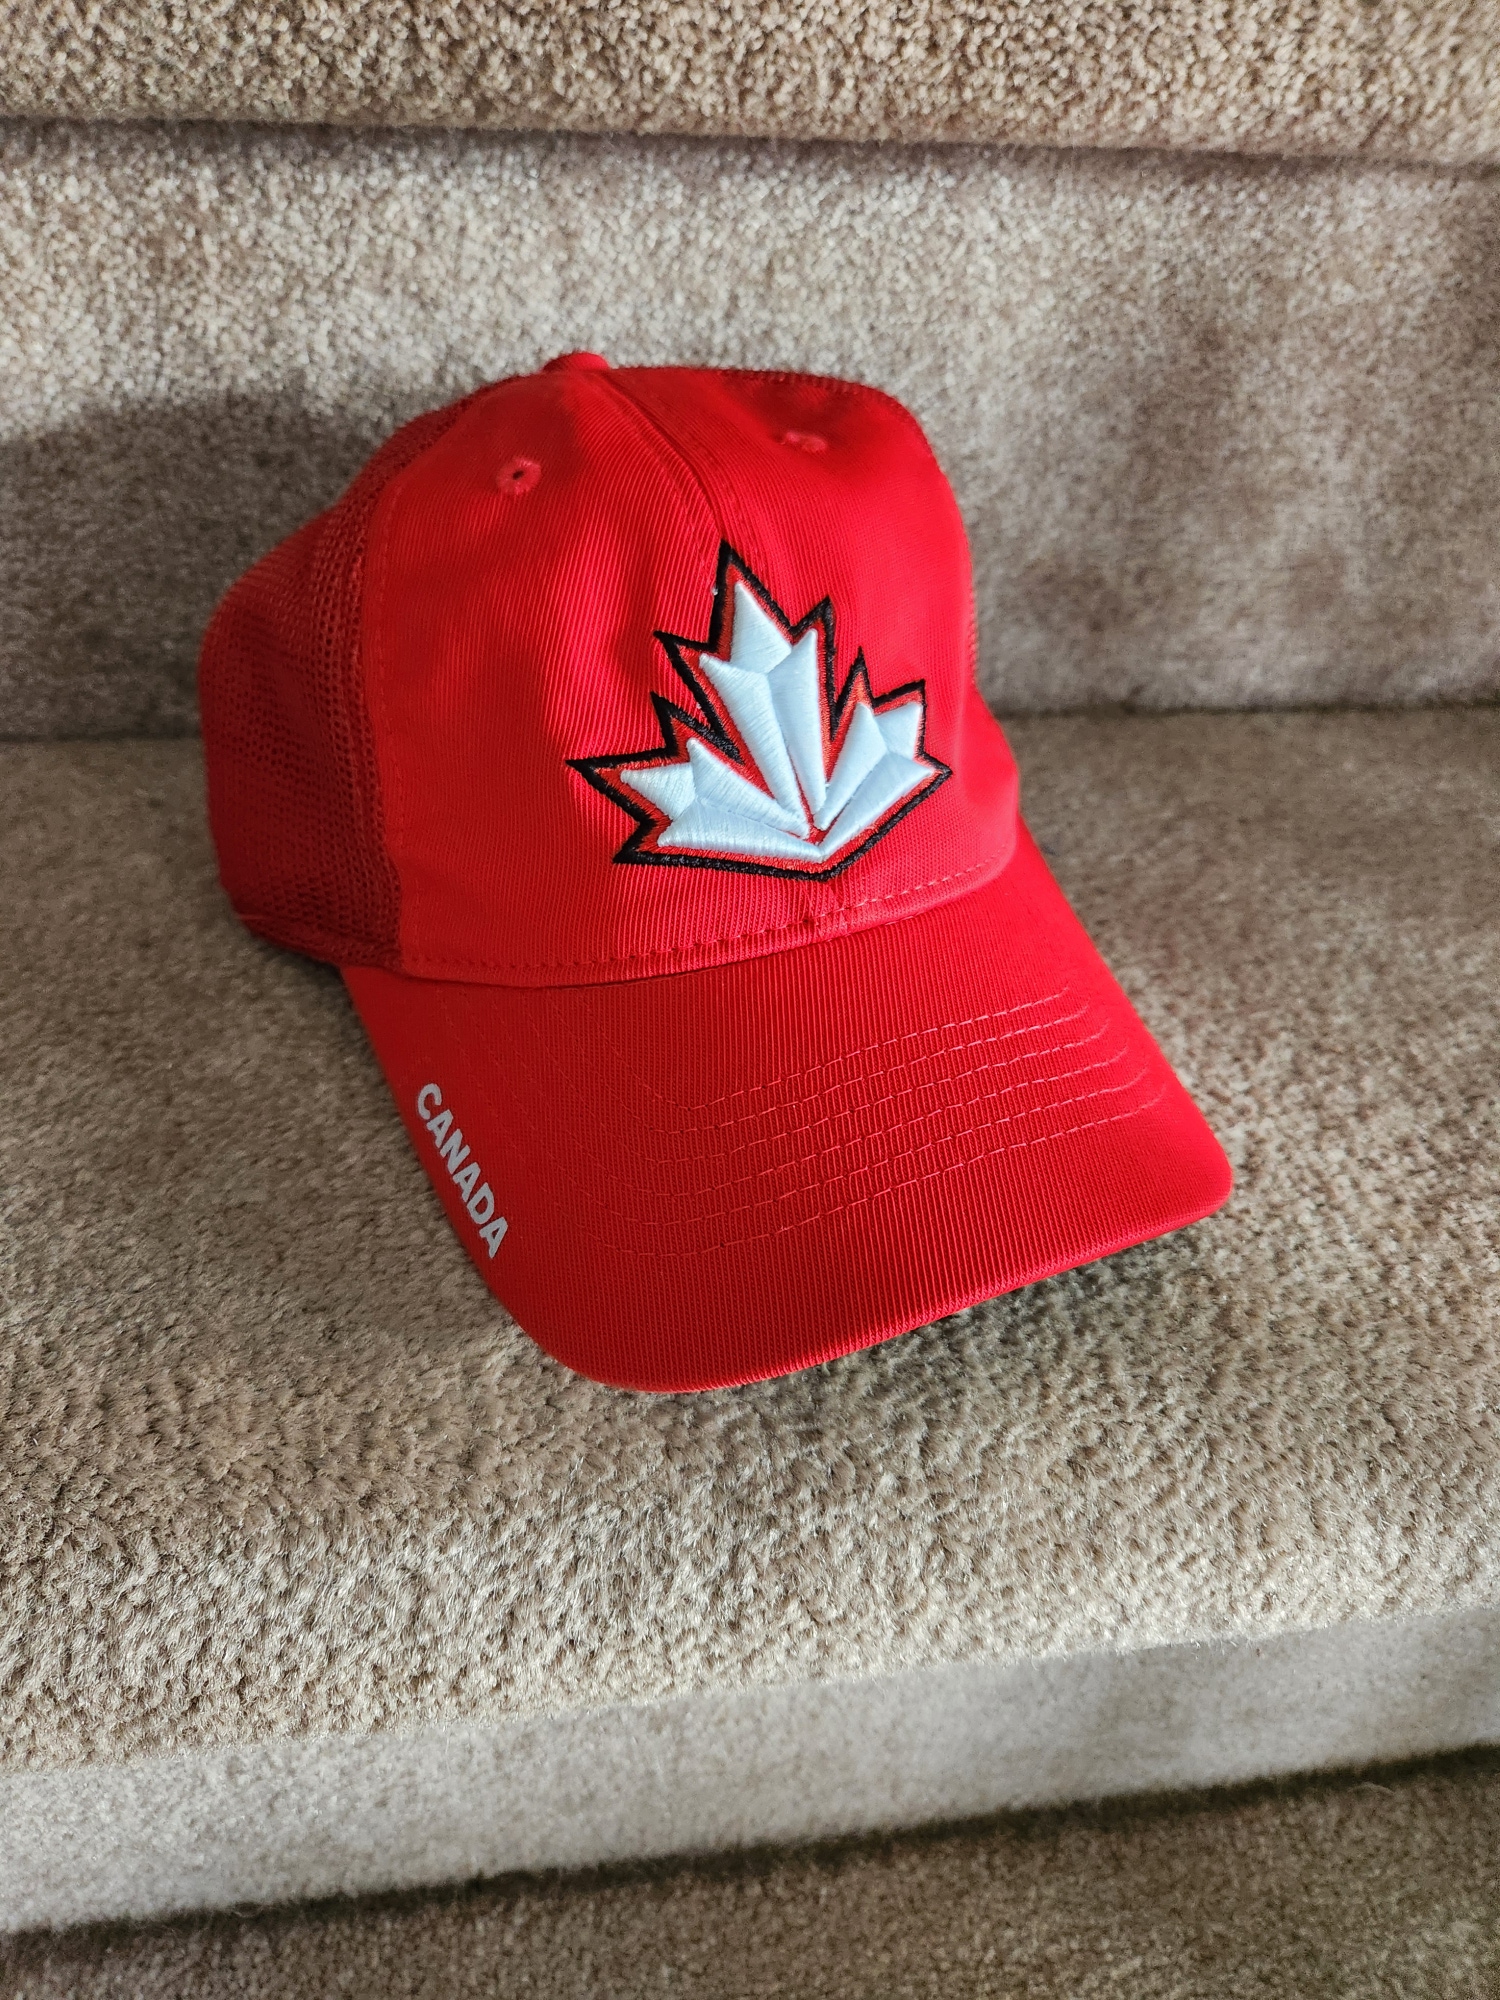 Red Team CanadaNew Men's XL Adidas Hat